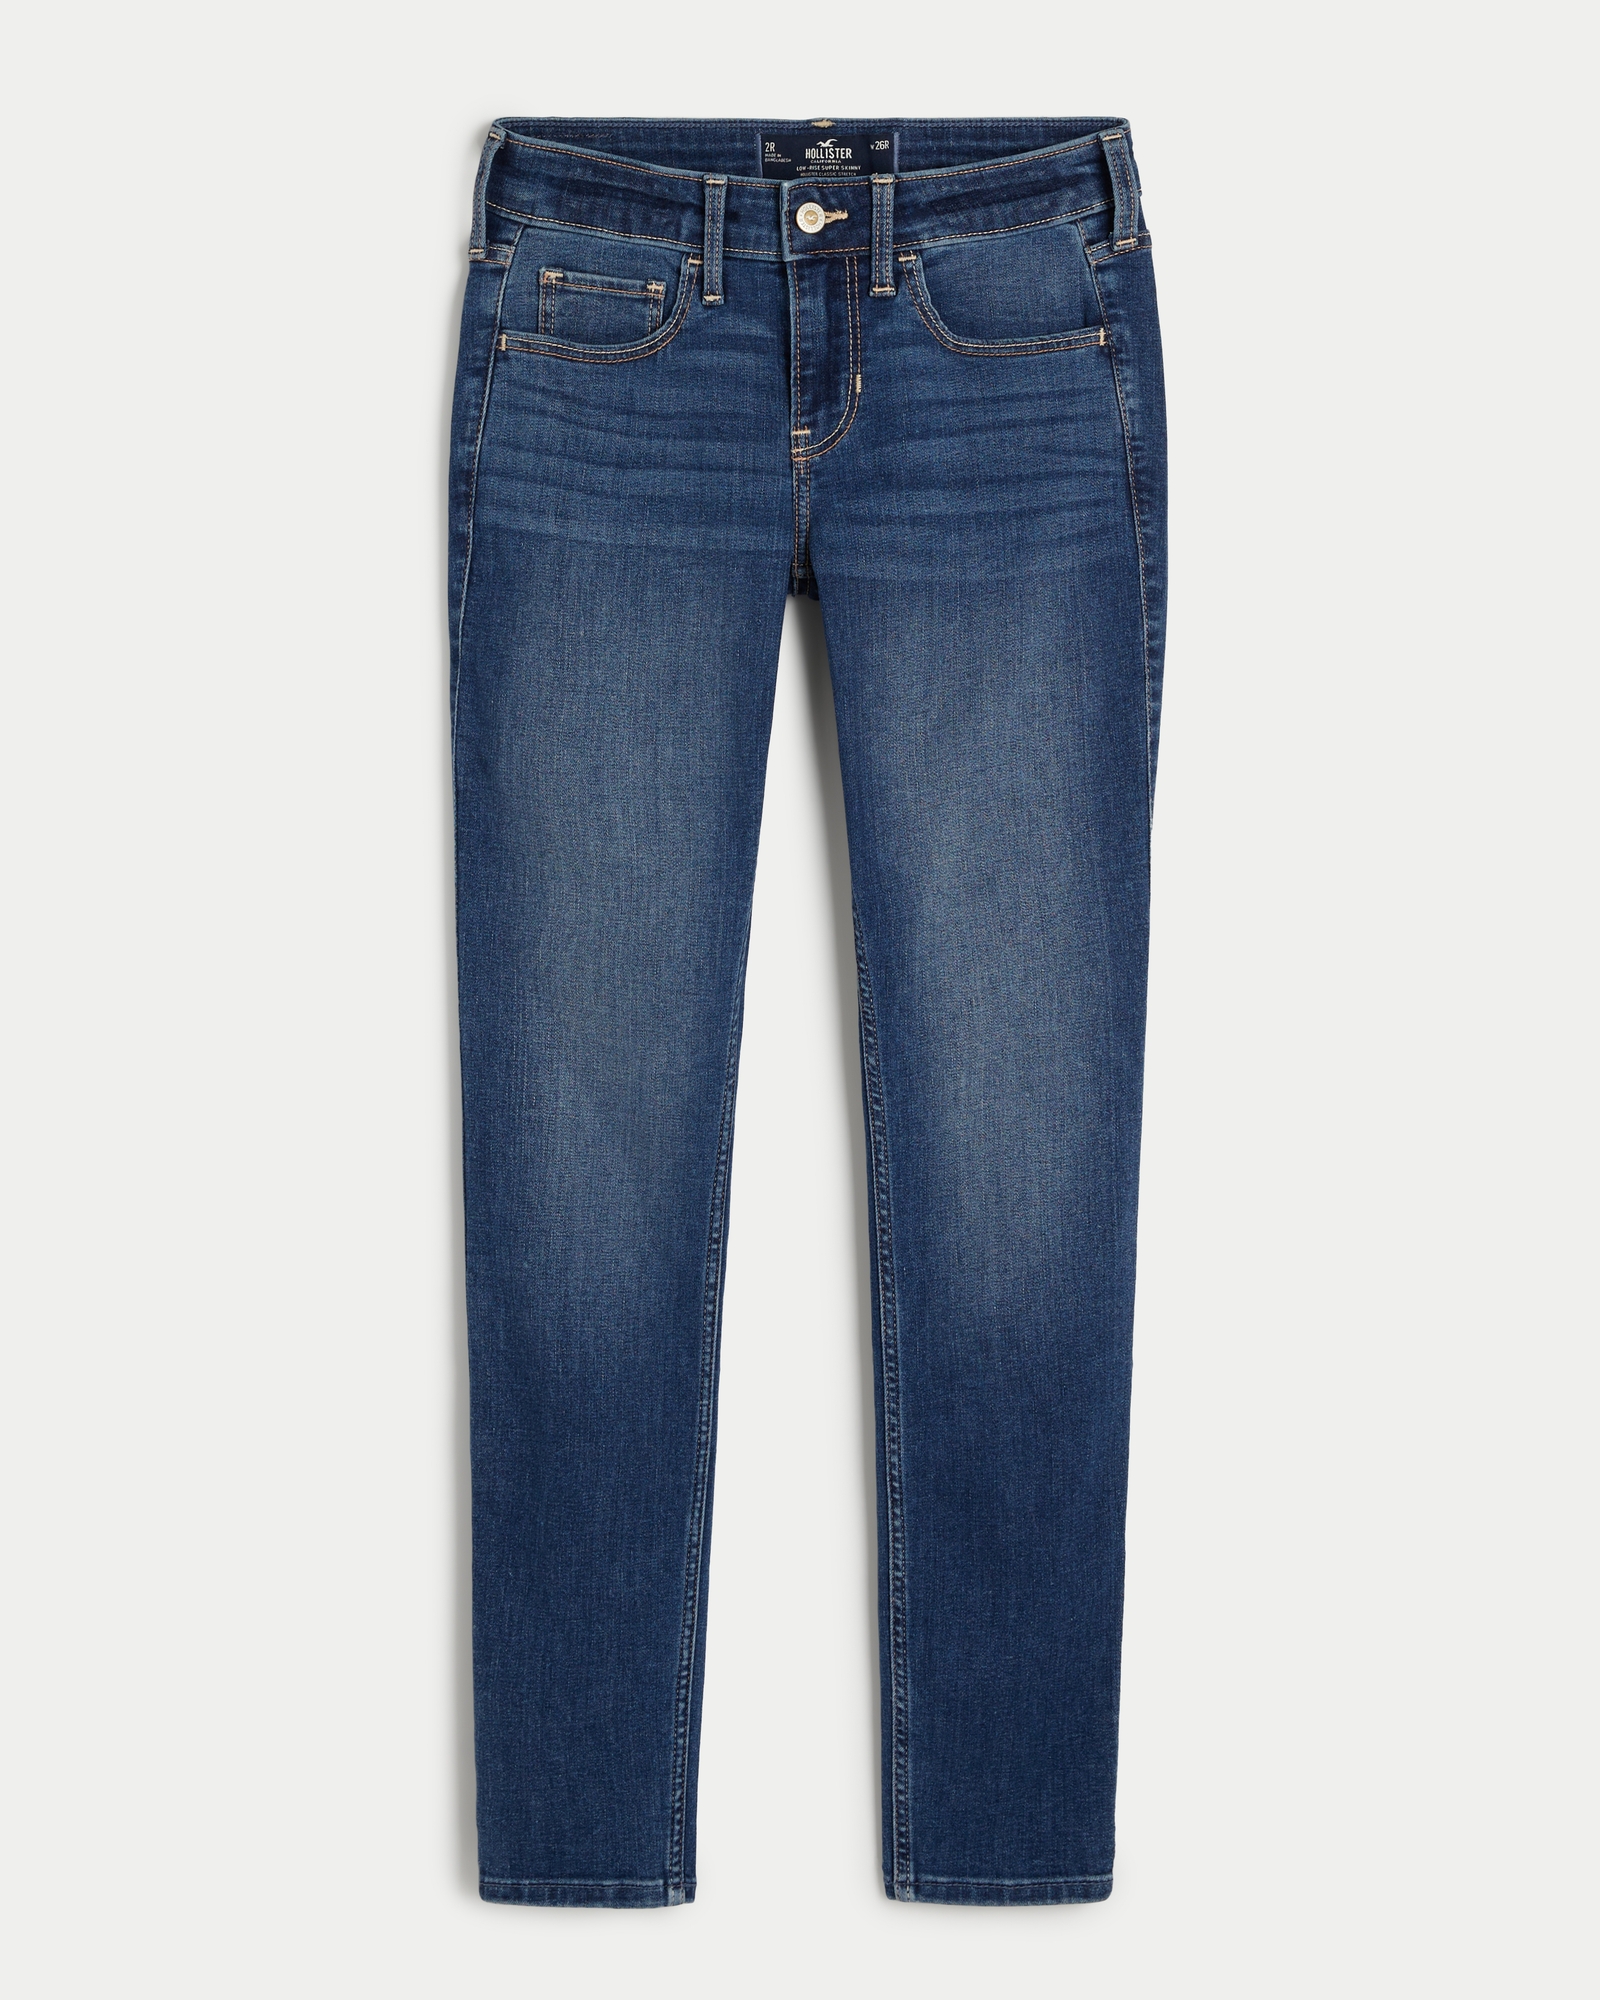 Women’s Hollister Jeans Low Rose Super Skinny Distressed Sz 7R W28 L30  Great 